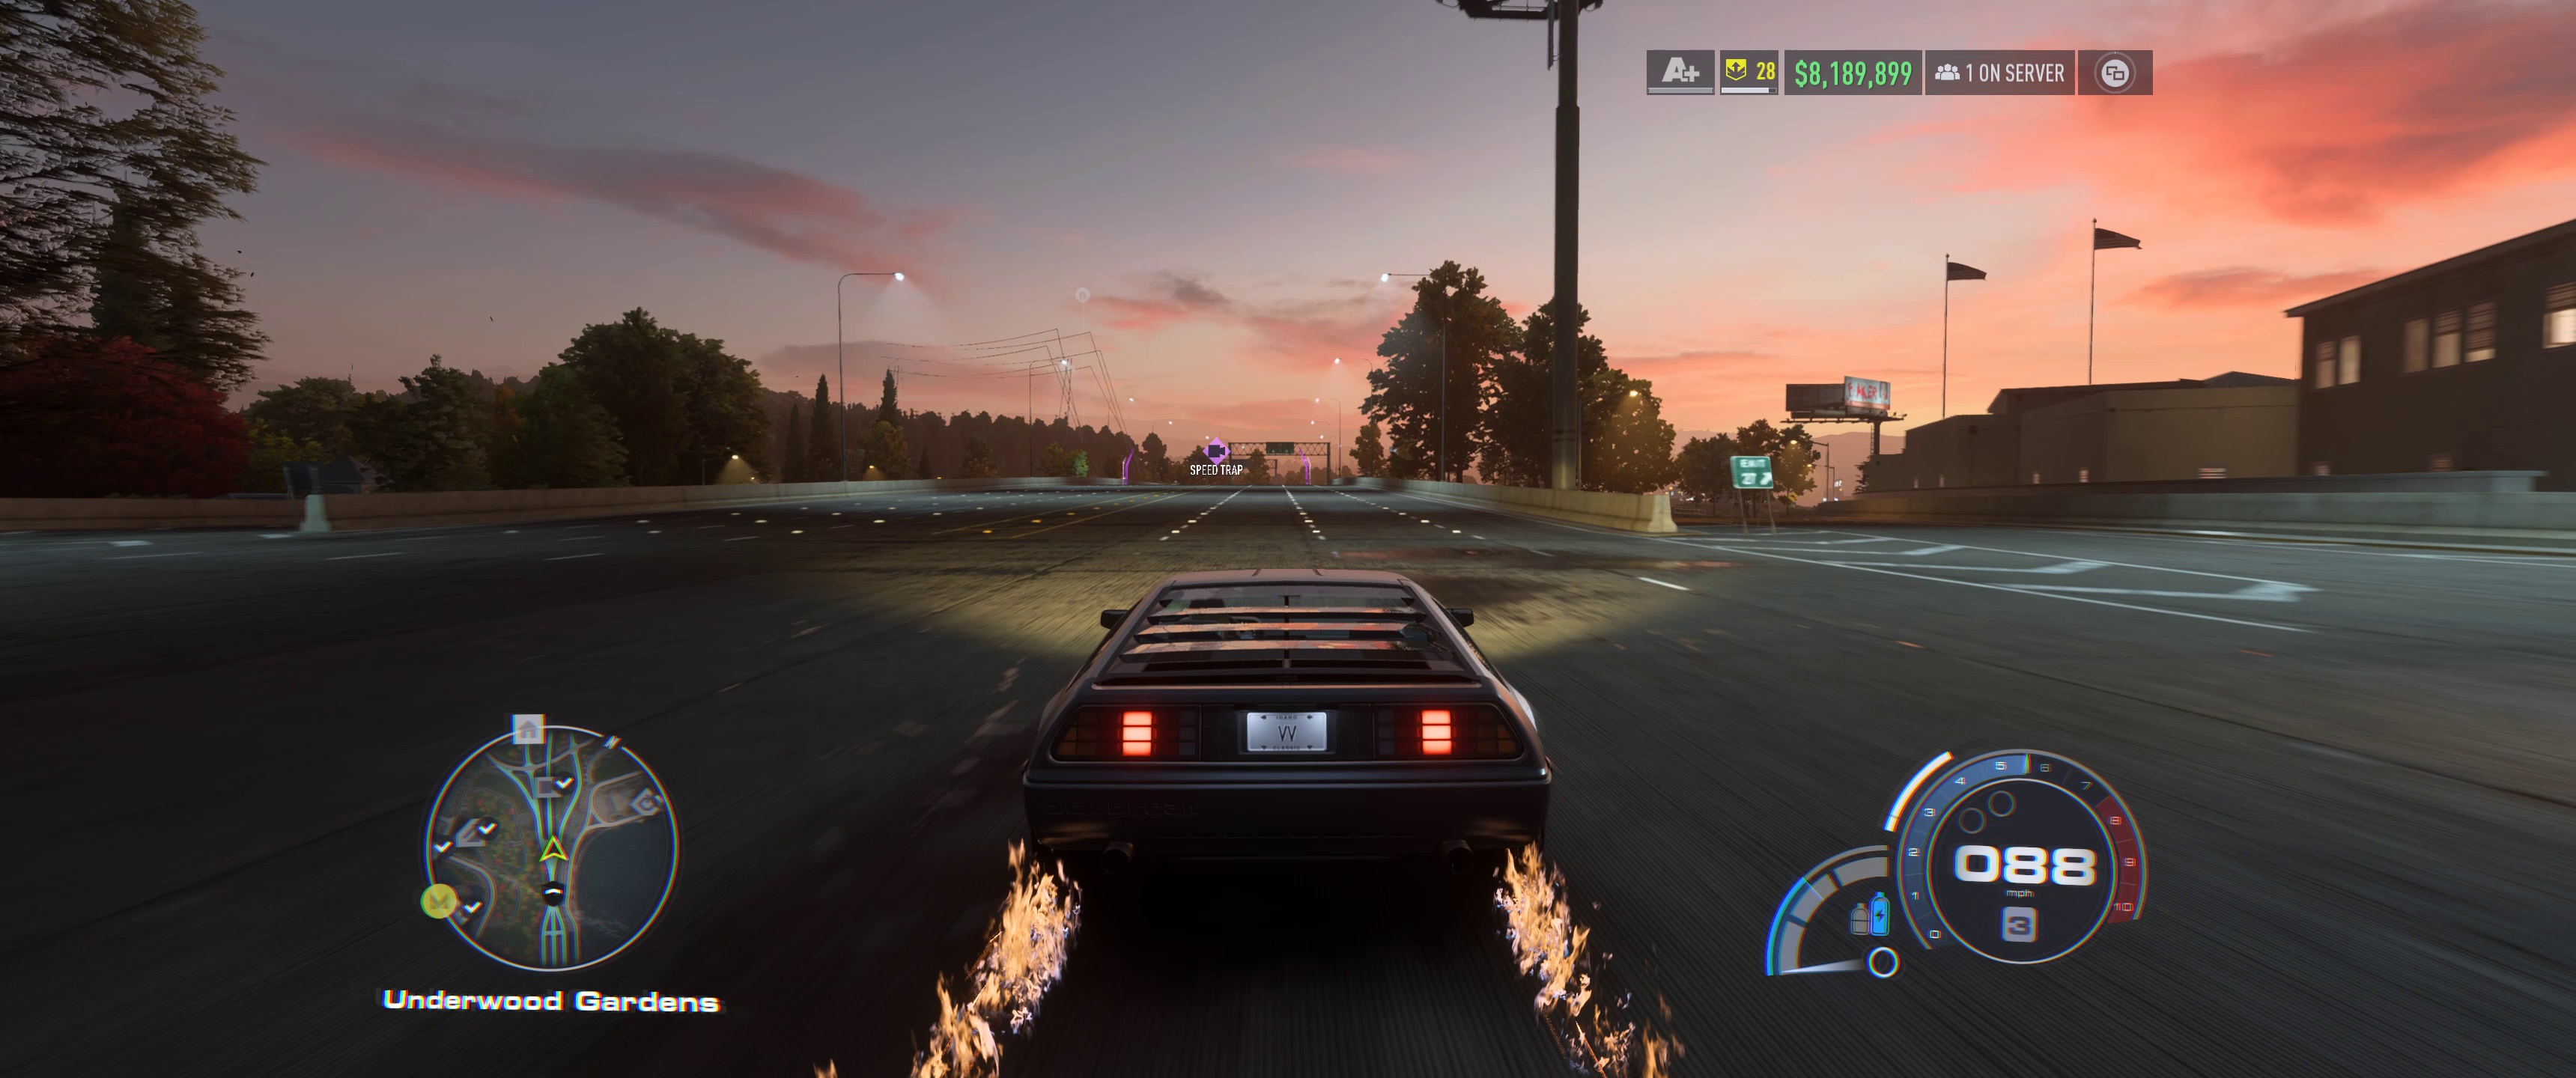 Need for Speed™ Unbound - DeLorean Fire Streaks Easter Egg Guide - Fire Streaks - 1261336